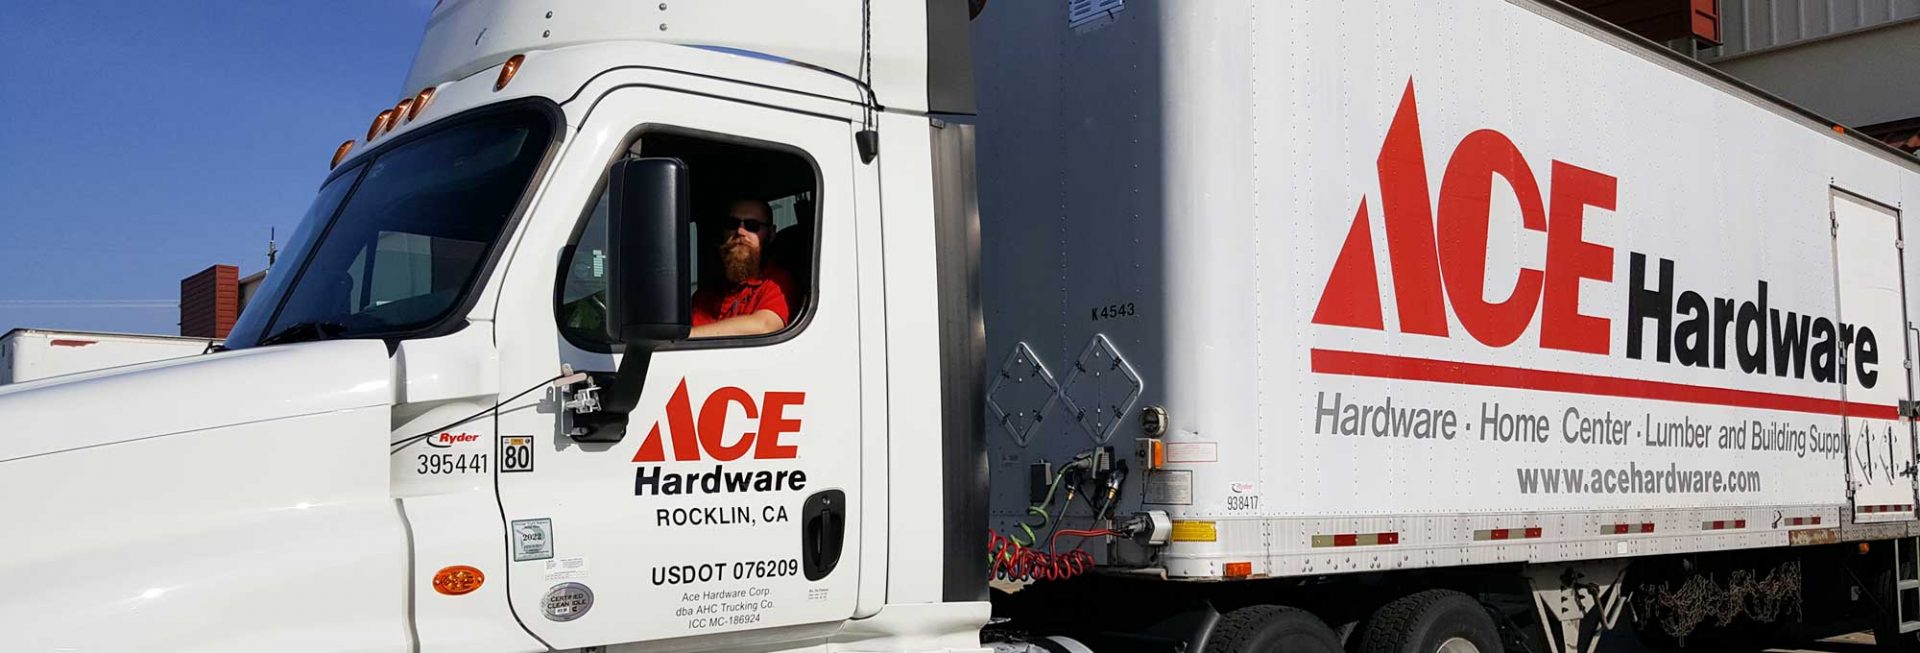 Driver Jobs Ace Hardware Ace Hardware Corporation